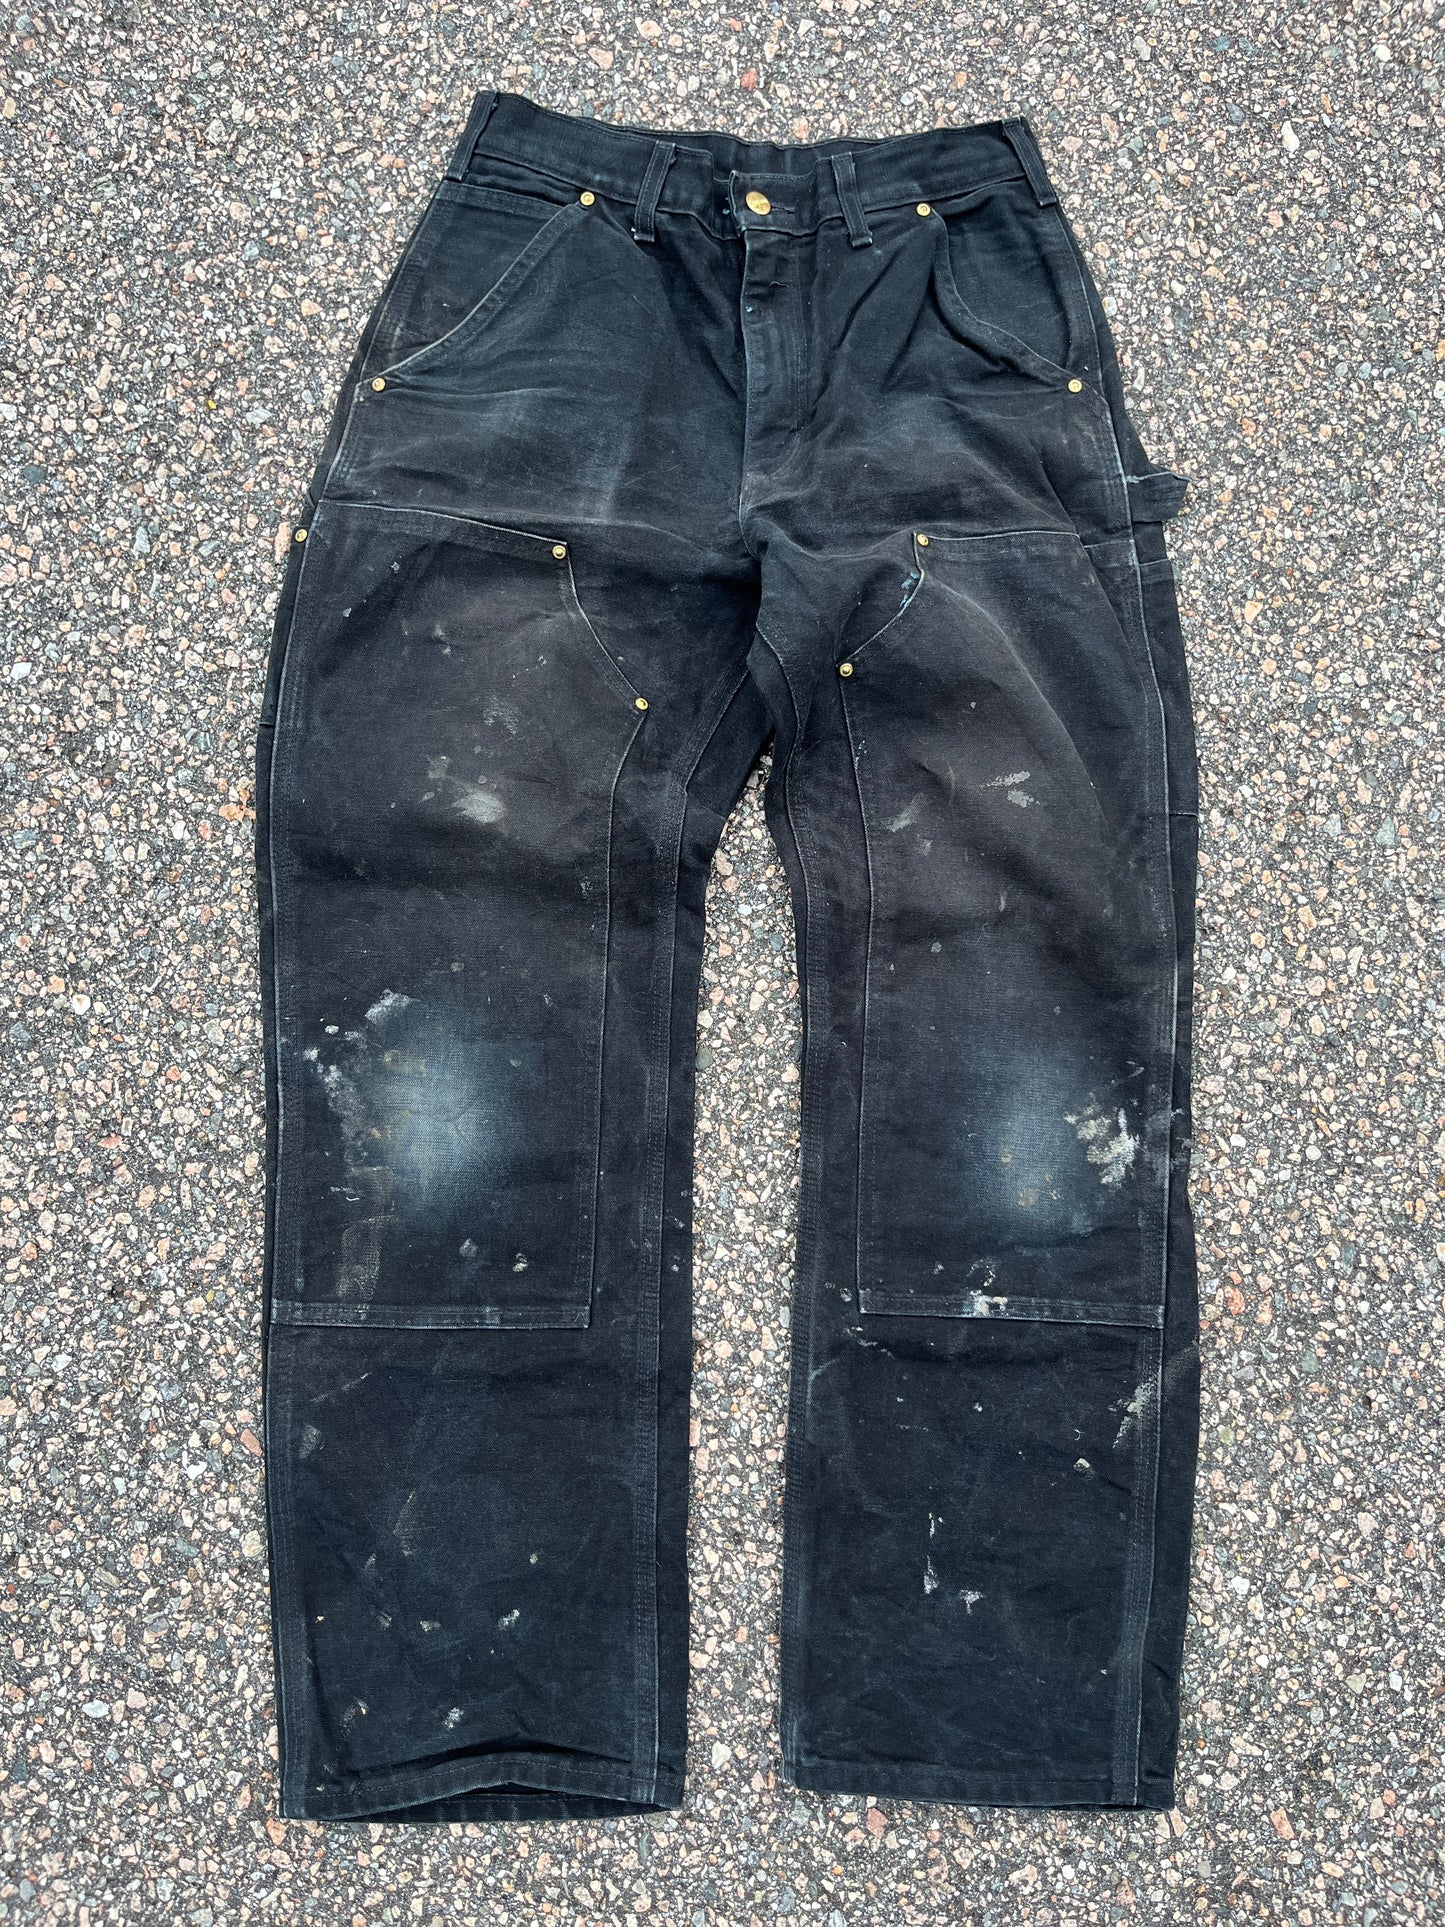 Faded n Painted Black Carhartt Double Knee Pants - 29 x 30